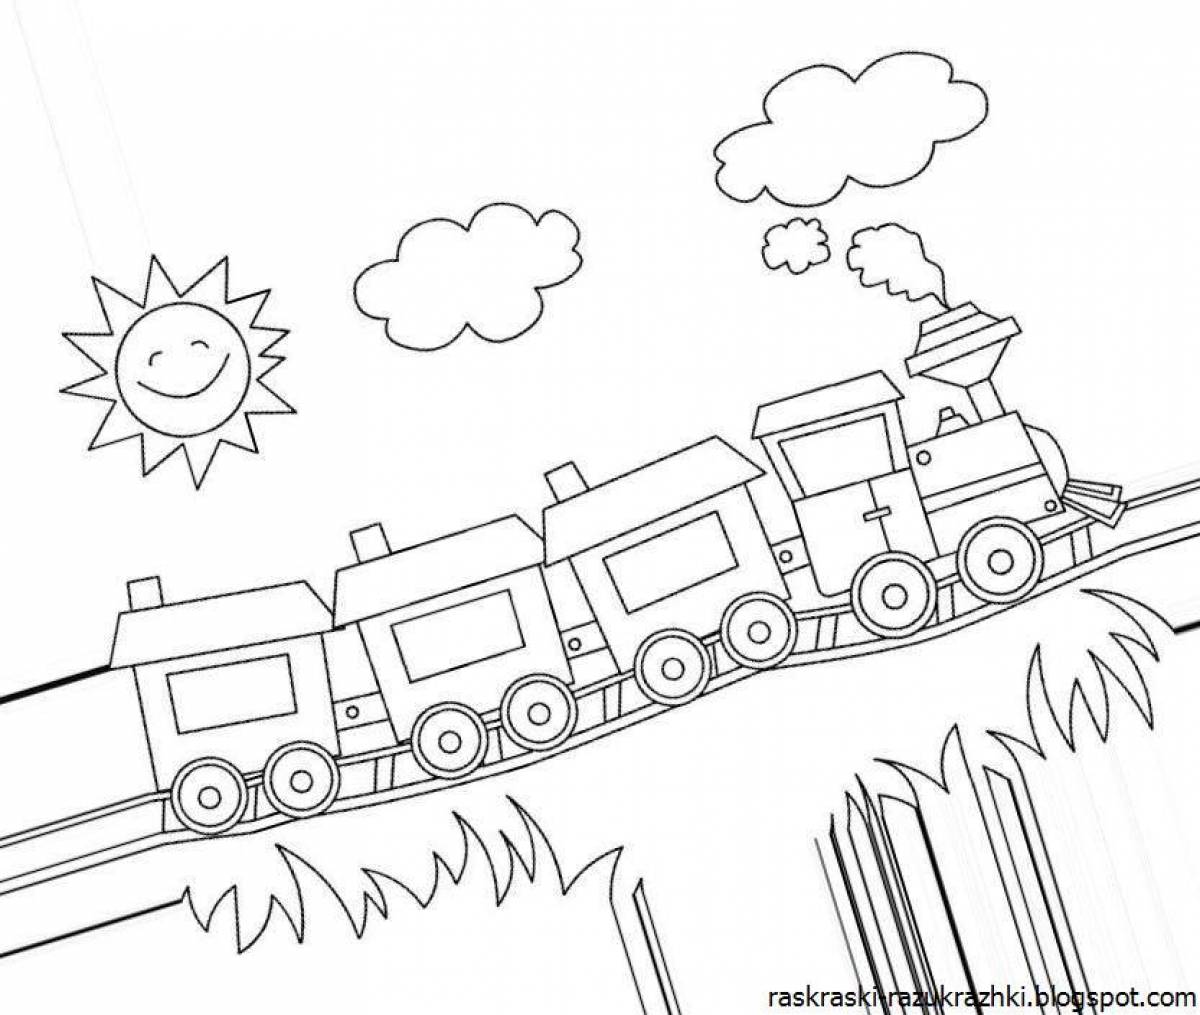 A fun train coloring book for kids